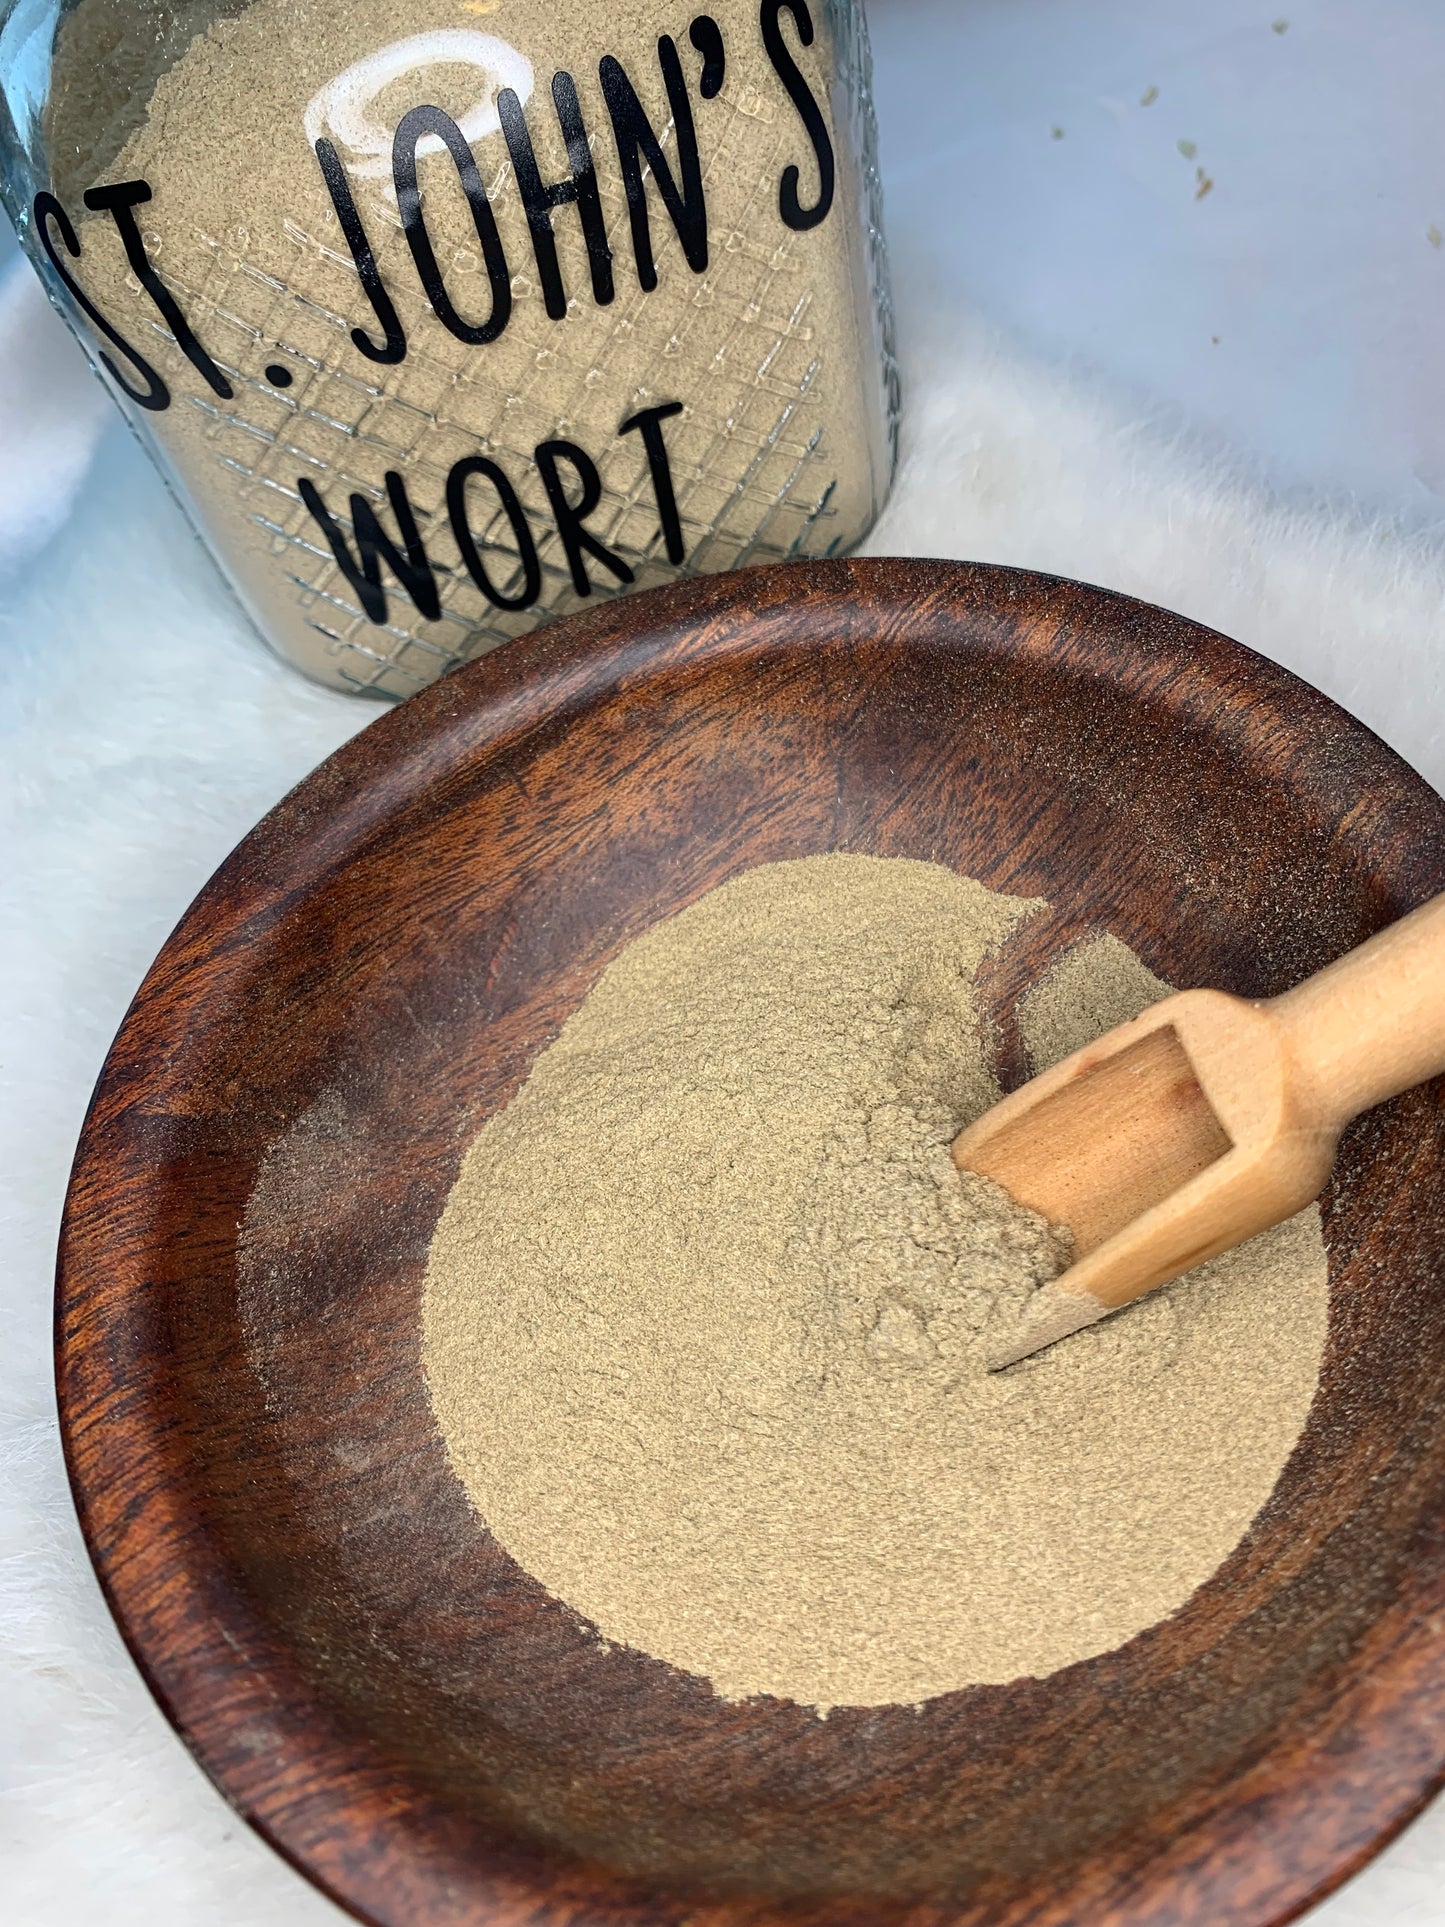 St. John’s wort powder